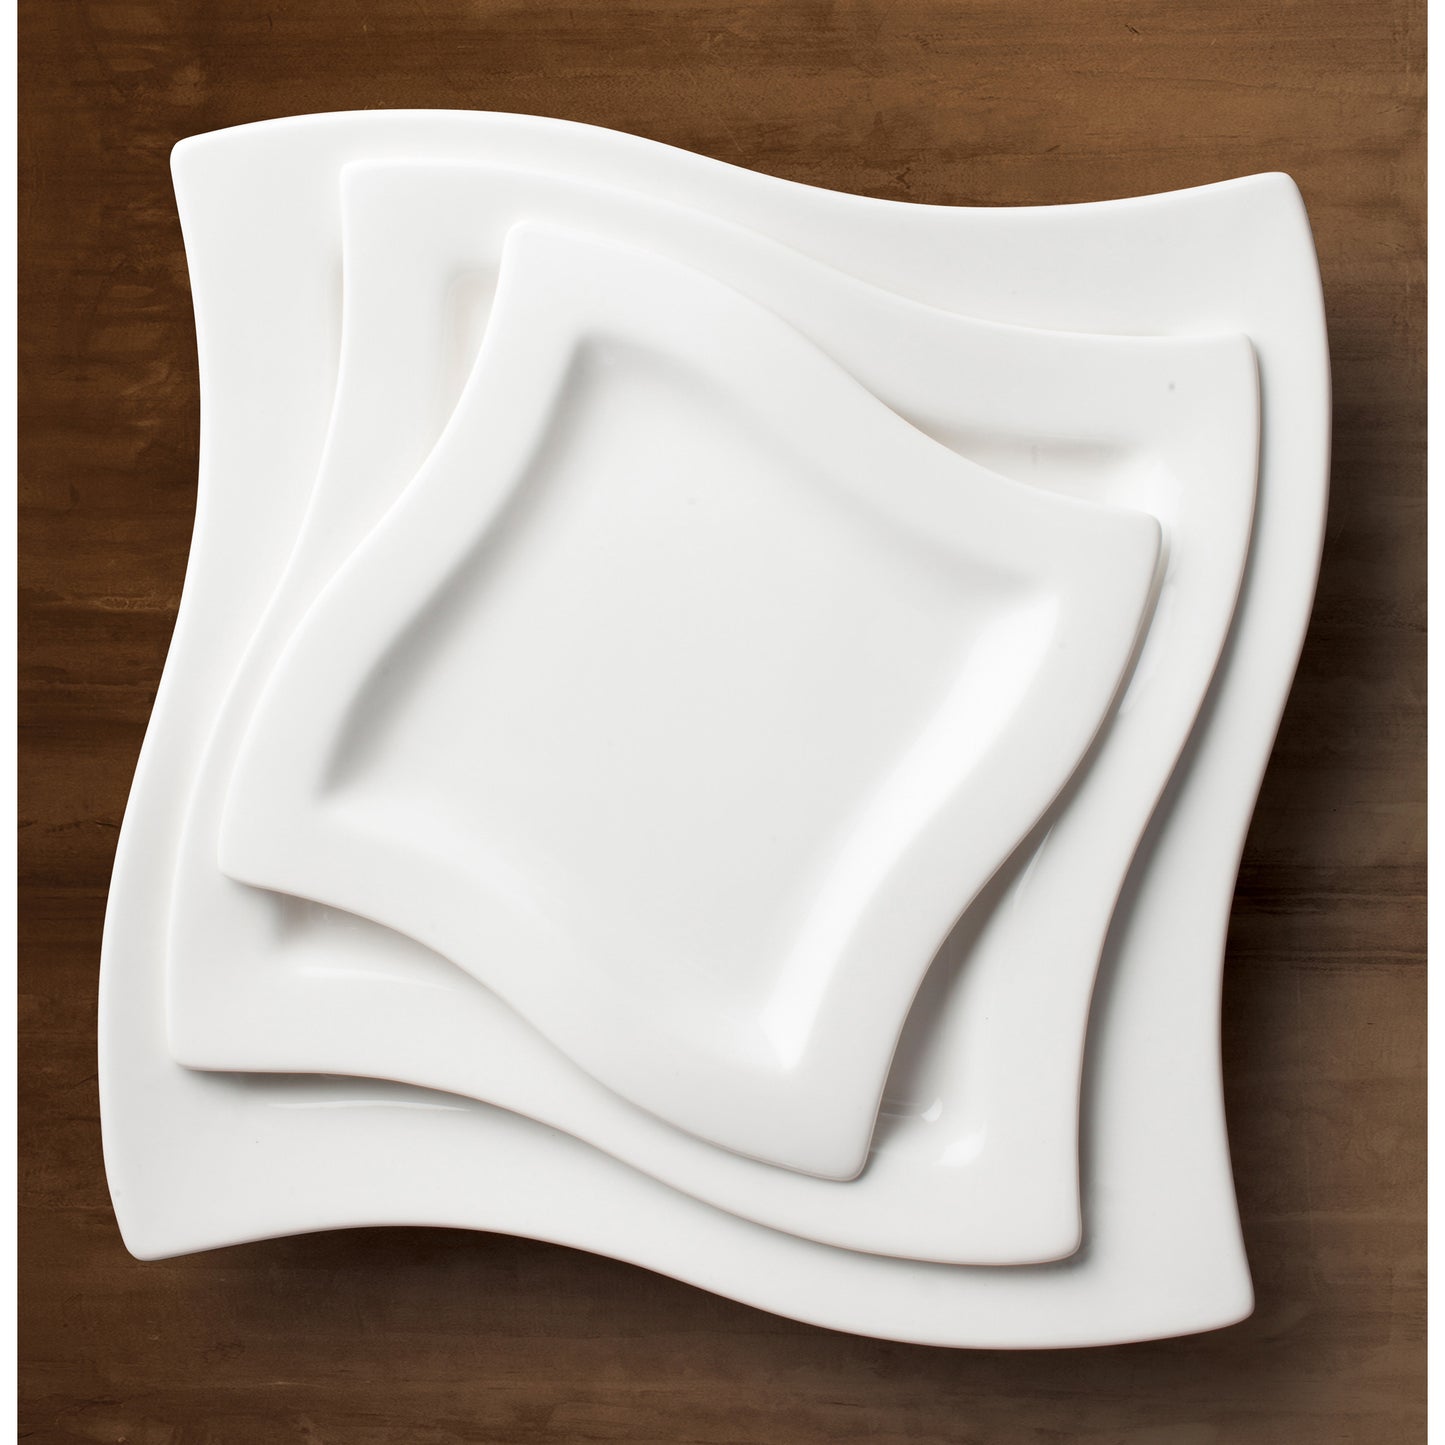 WDP011-102 - 7-1/2"Sq Porcelain Square Plate, Bright White, 24 pcs/case